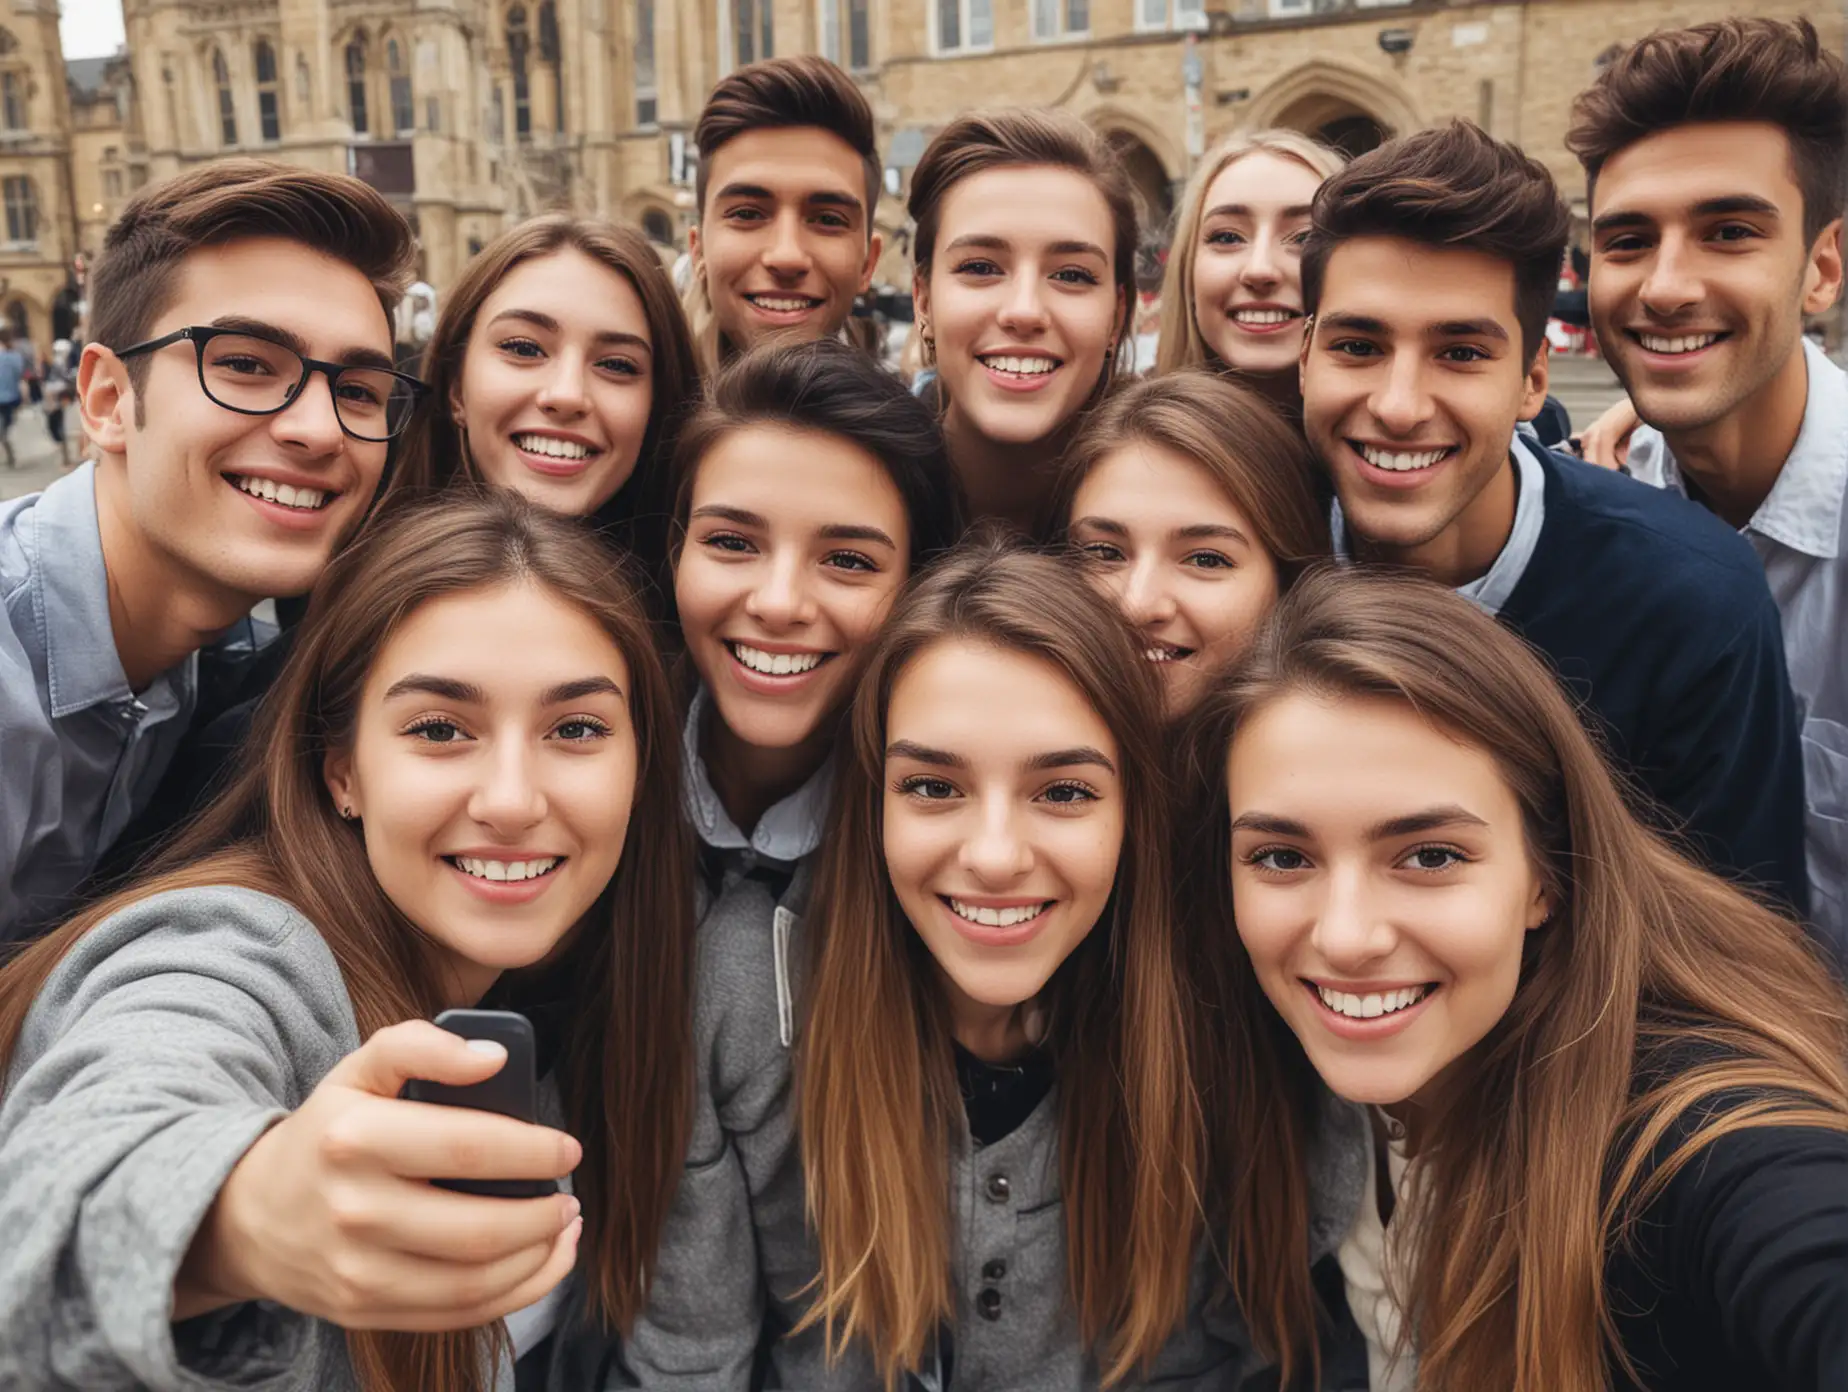 University Friends Taking a Selfie Together